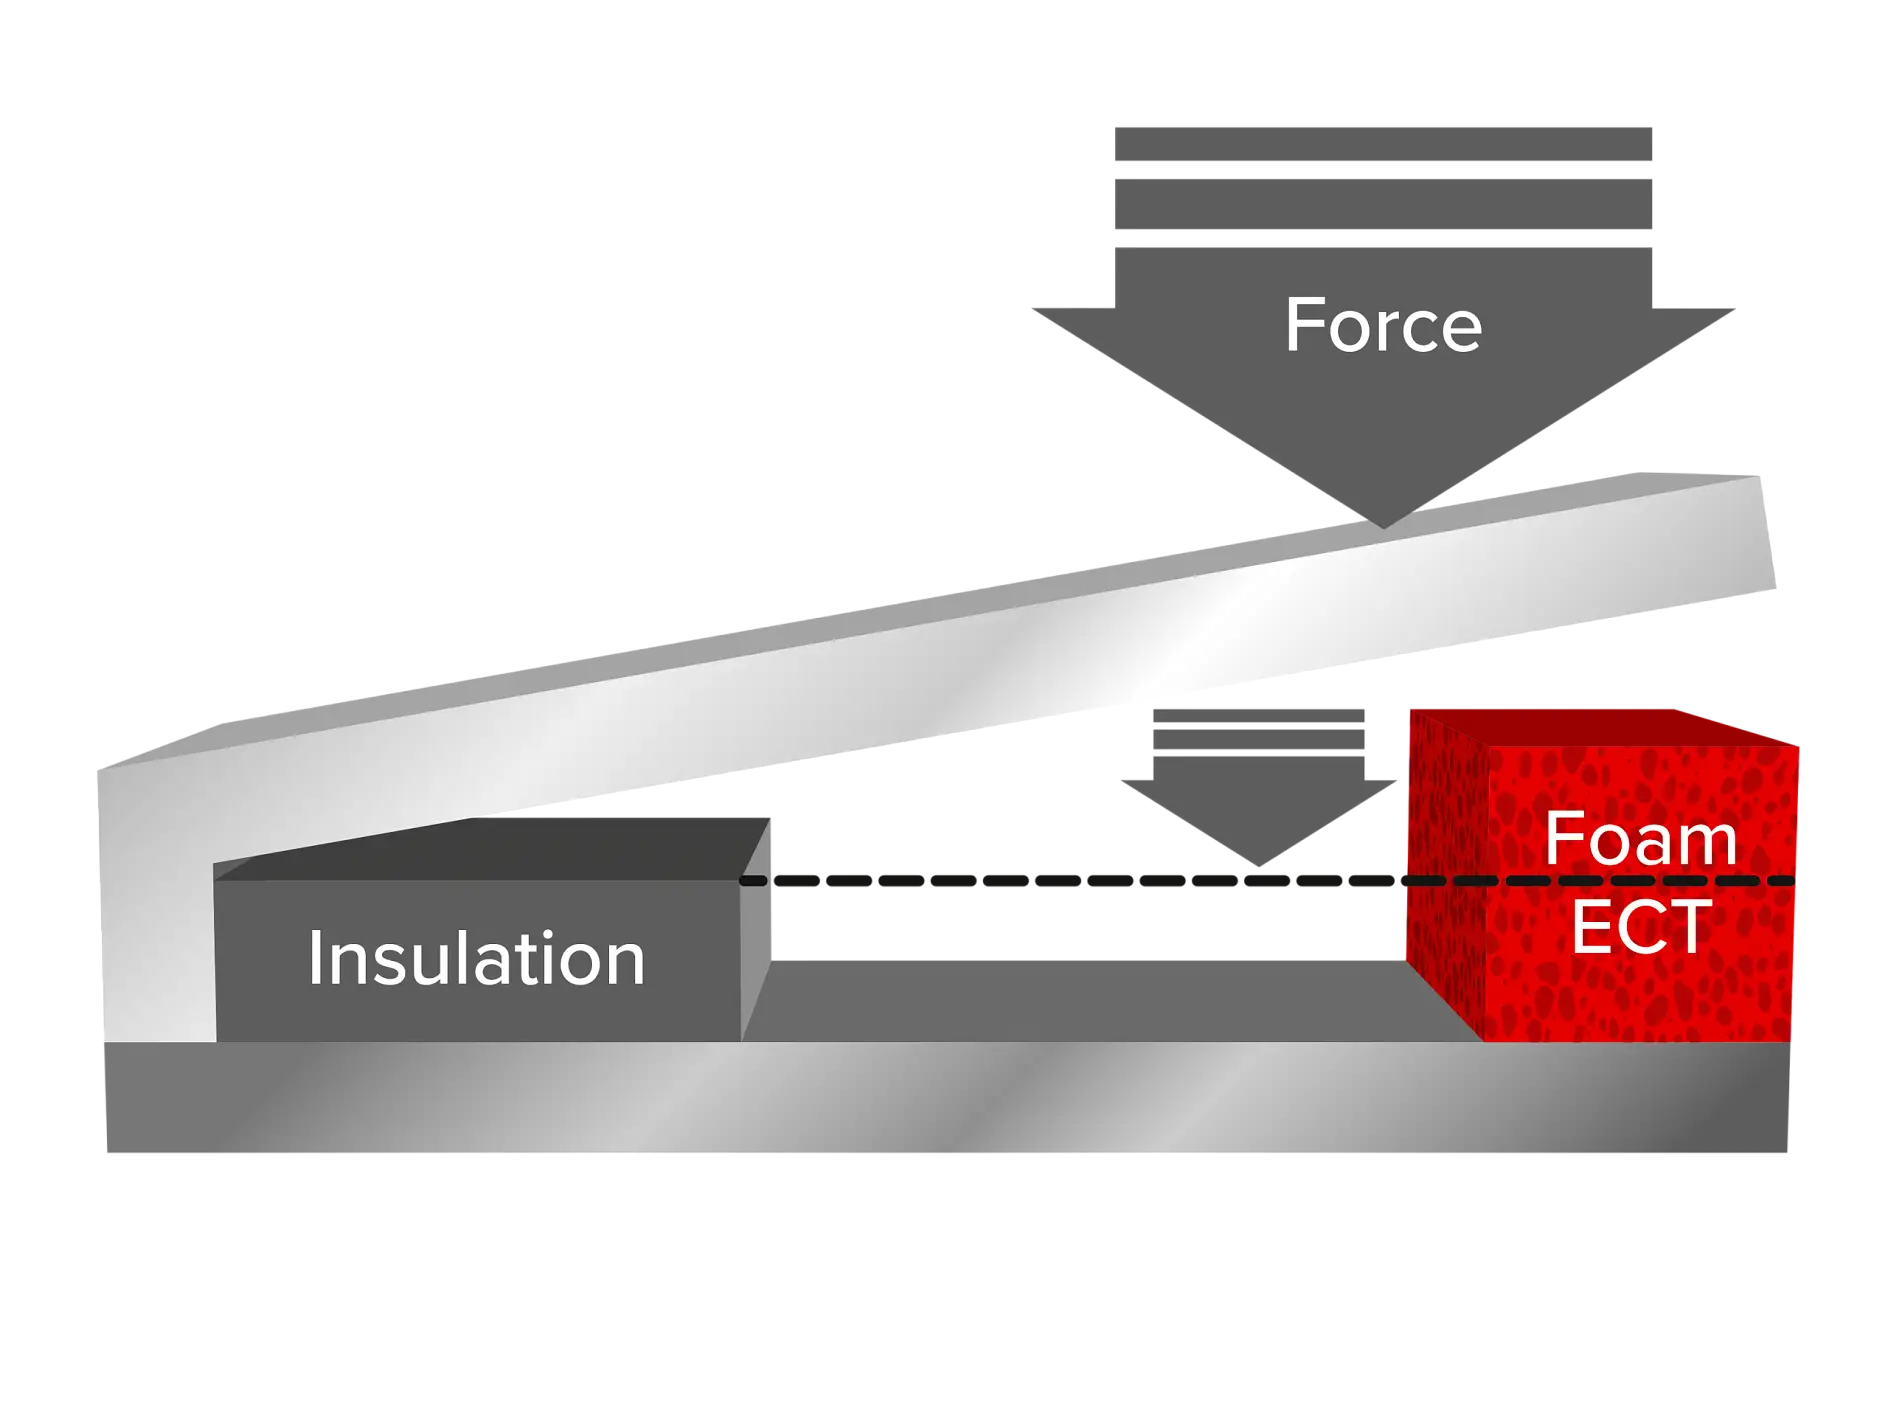 tesa-electronics-ect-foam-compression-gap-filling-illustration